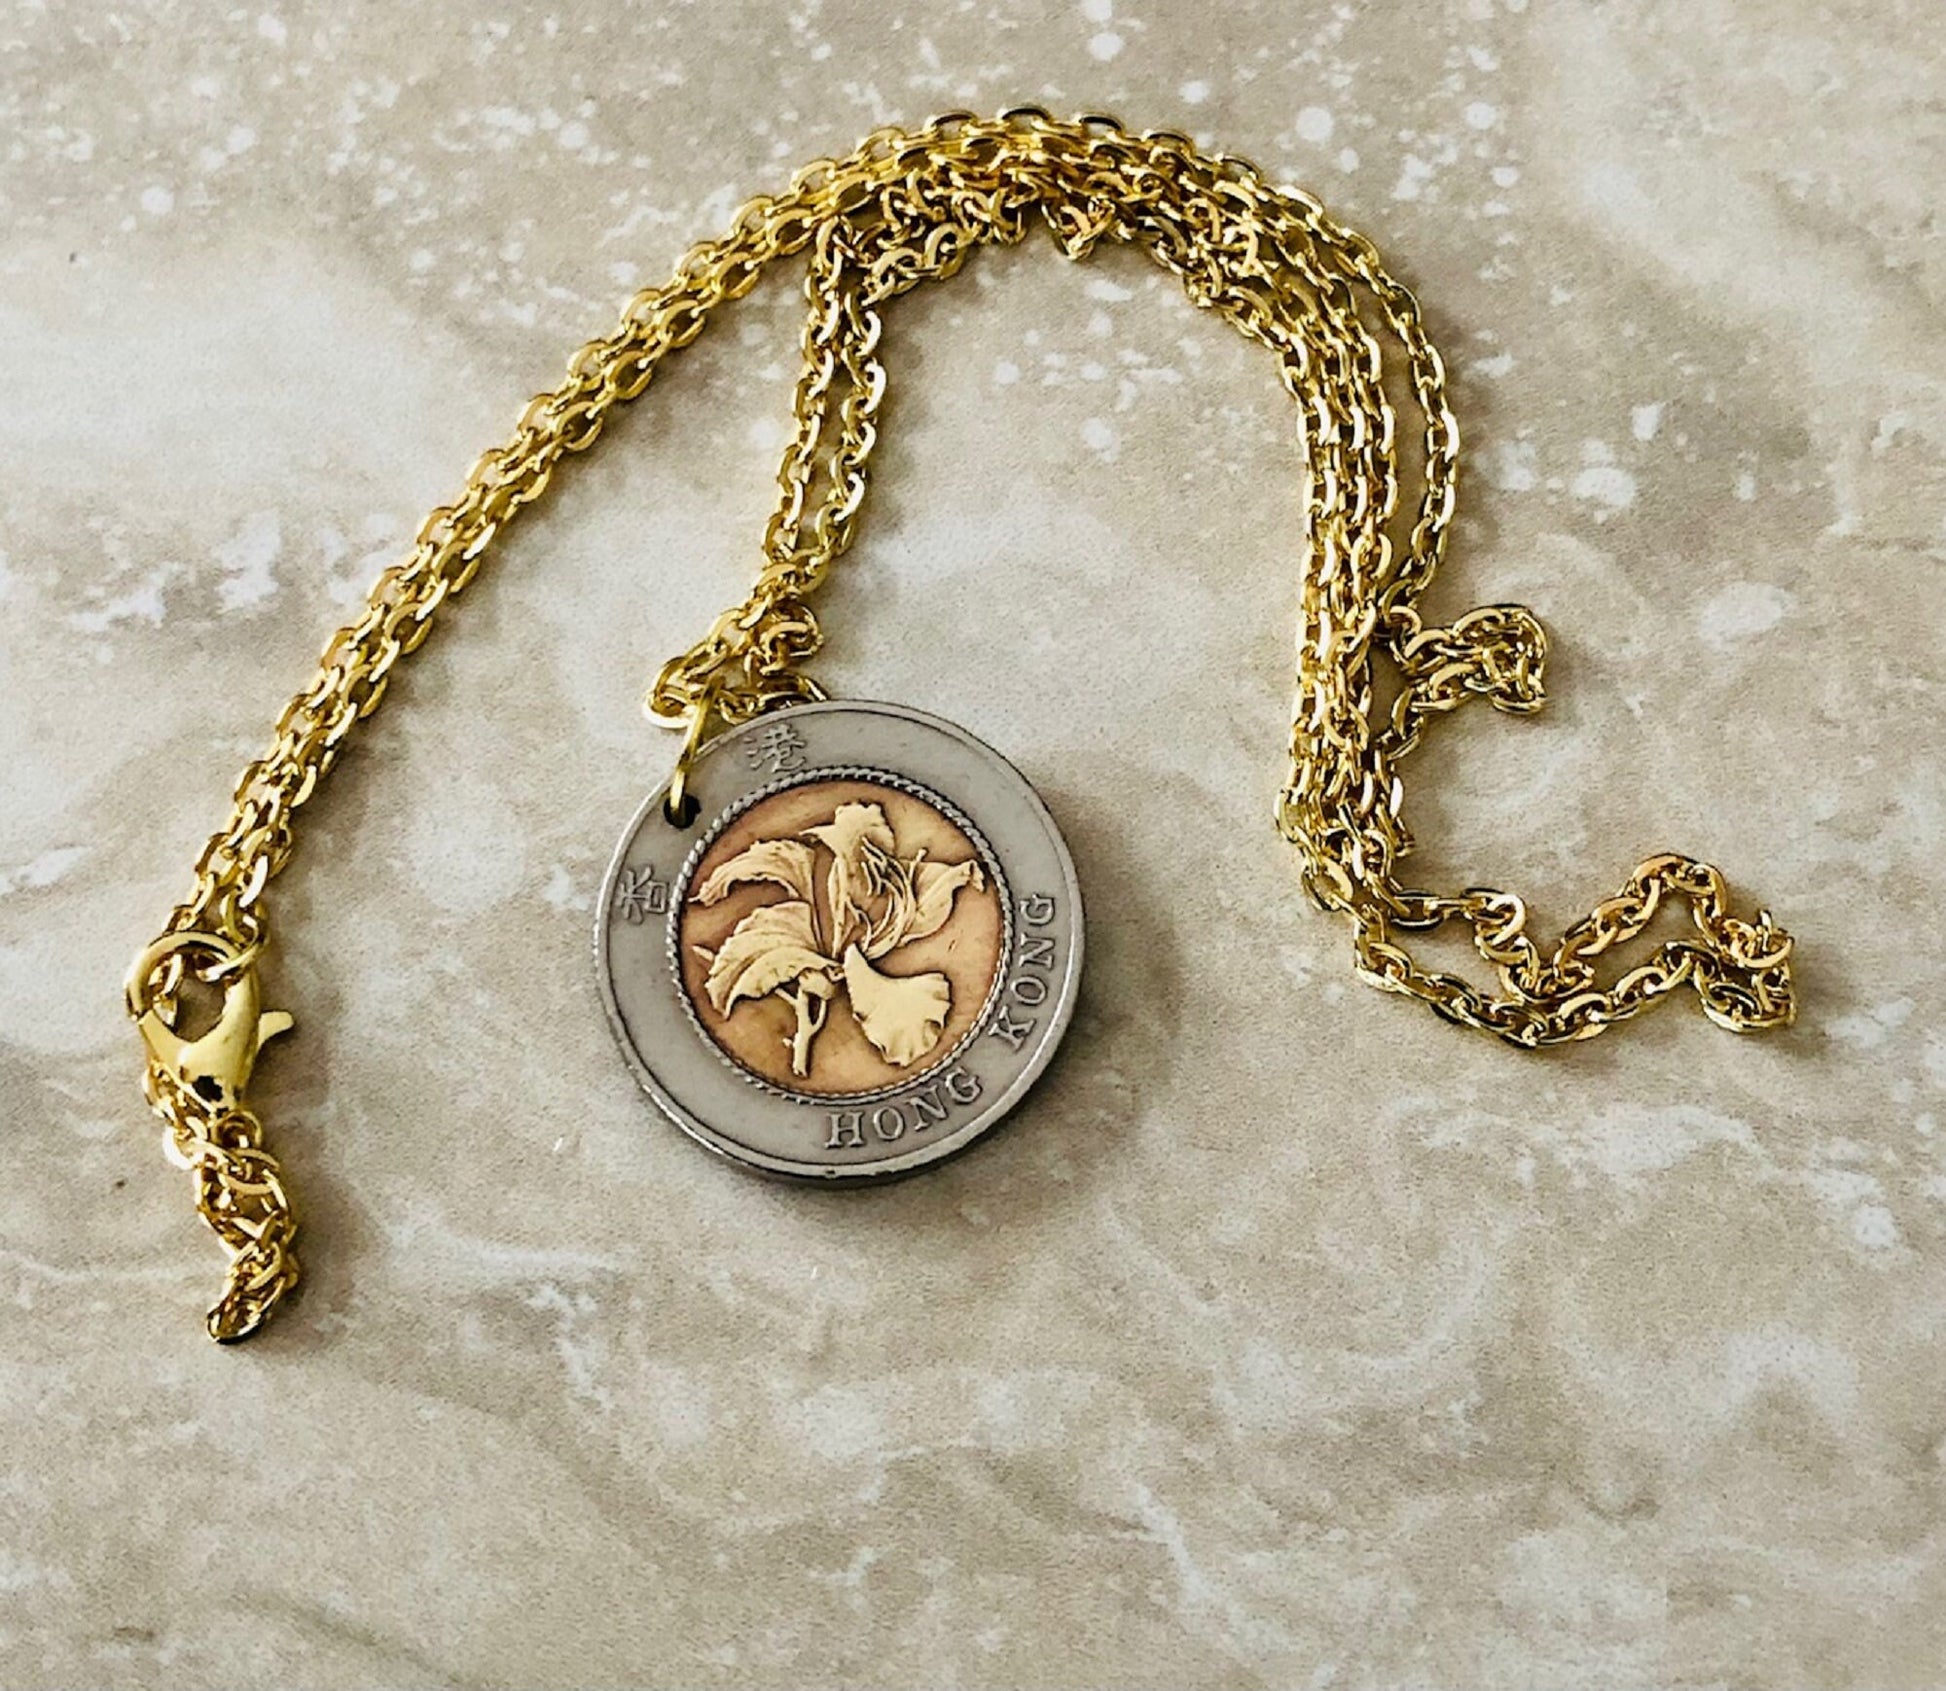 Hong Kong Coin Necklace 10 Dollars Bi-Metallic Pendant China Vintage Rare Coins Coin Enthusiast Fashion Accessory Handmade